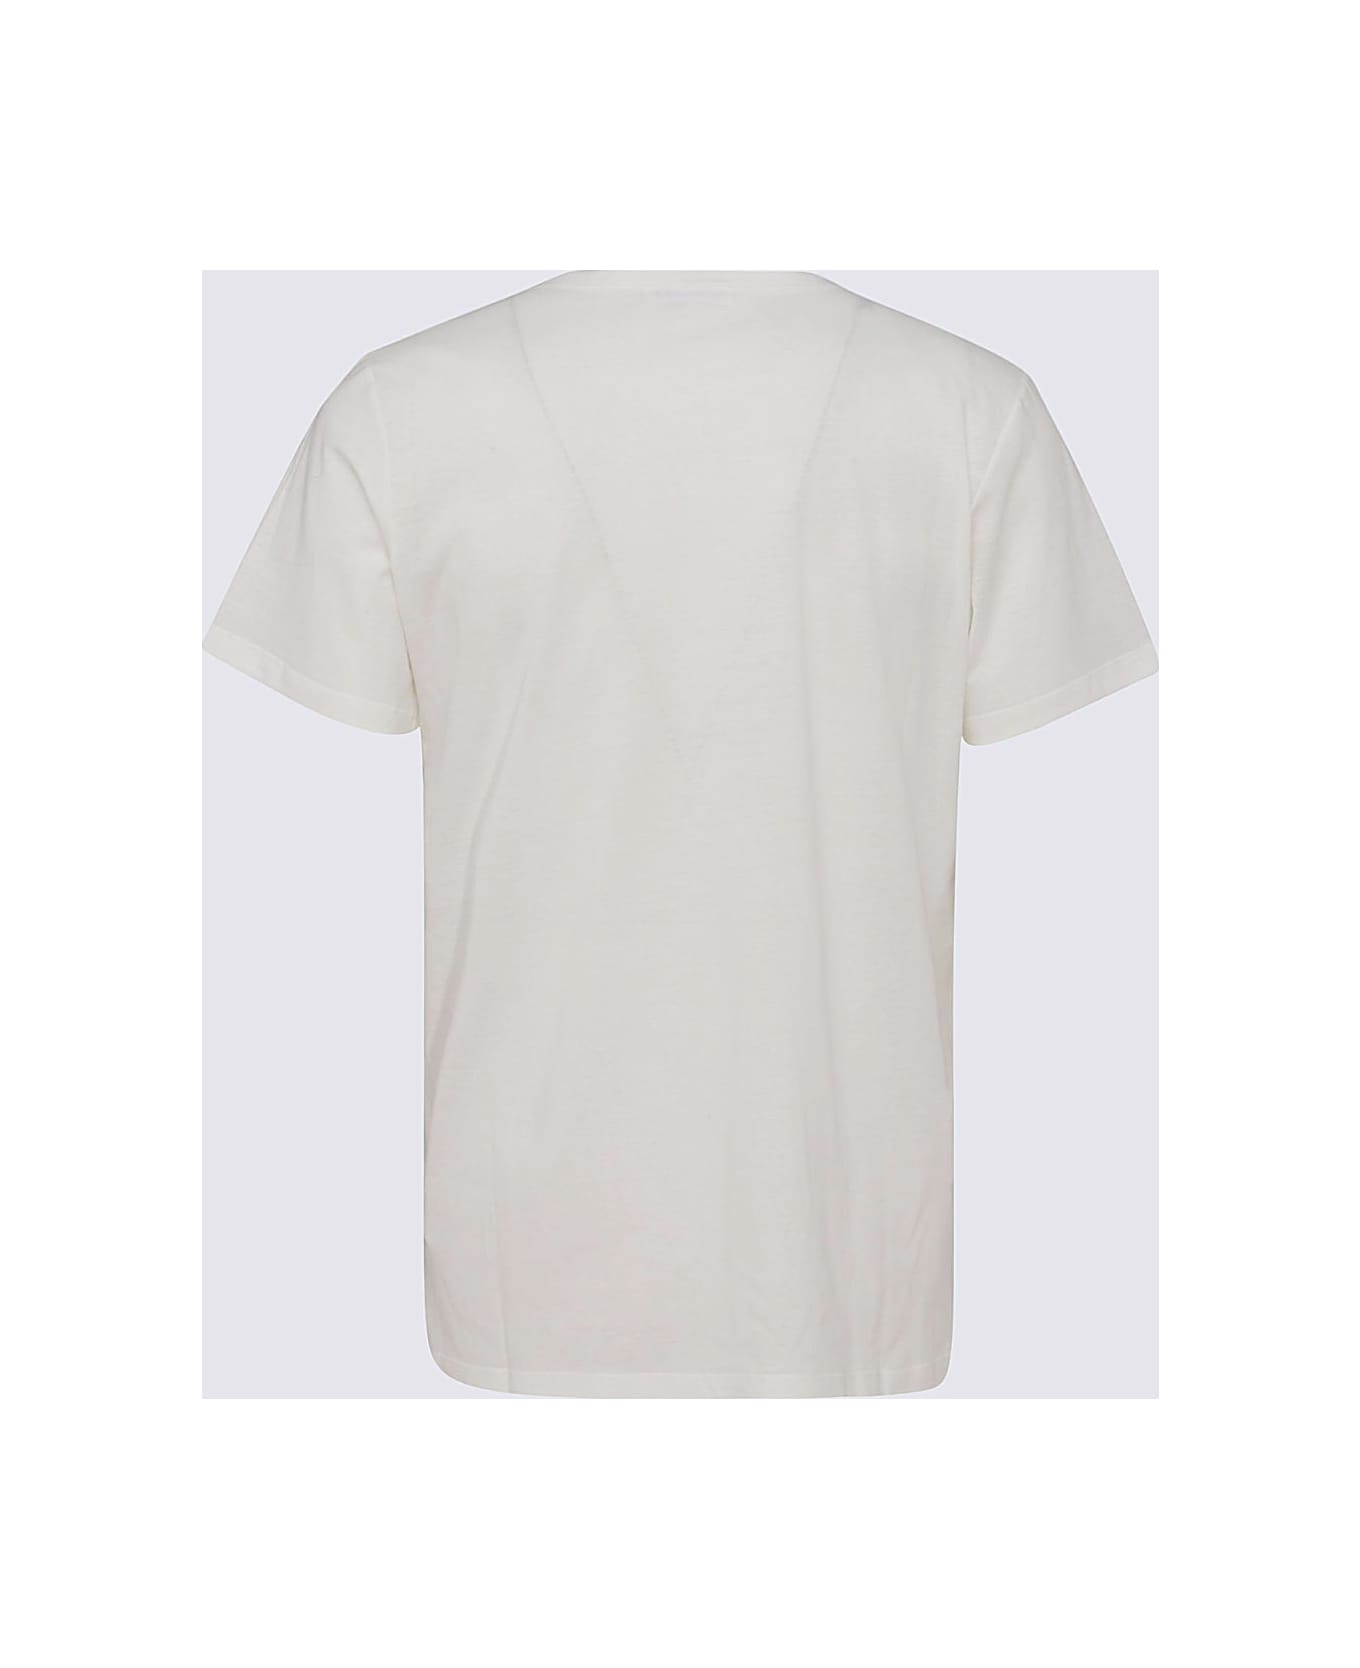 Jil Sander White Cotton T-shirt - OPTIC WHITE